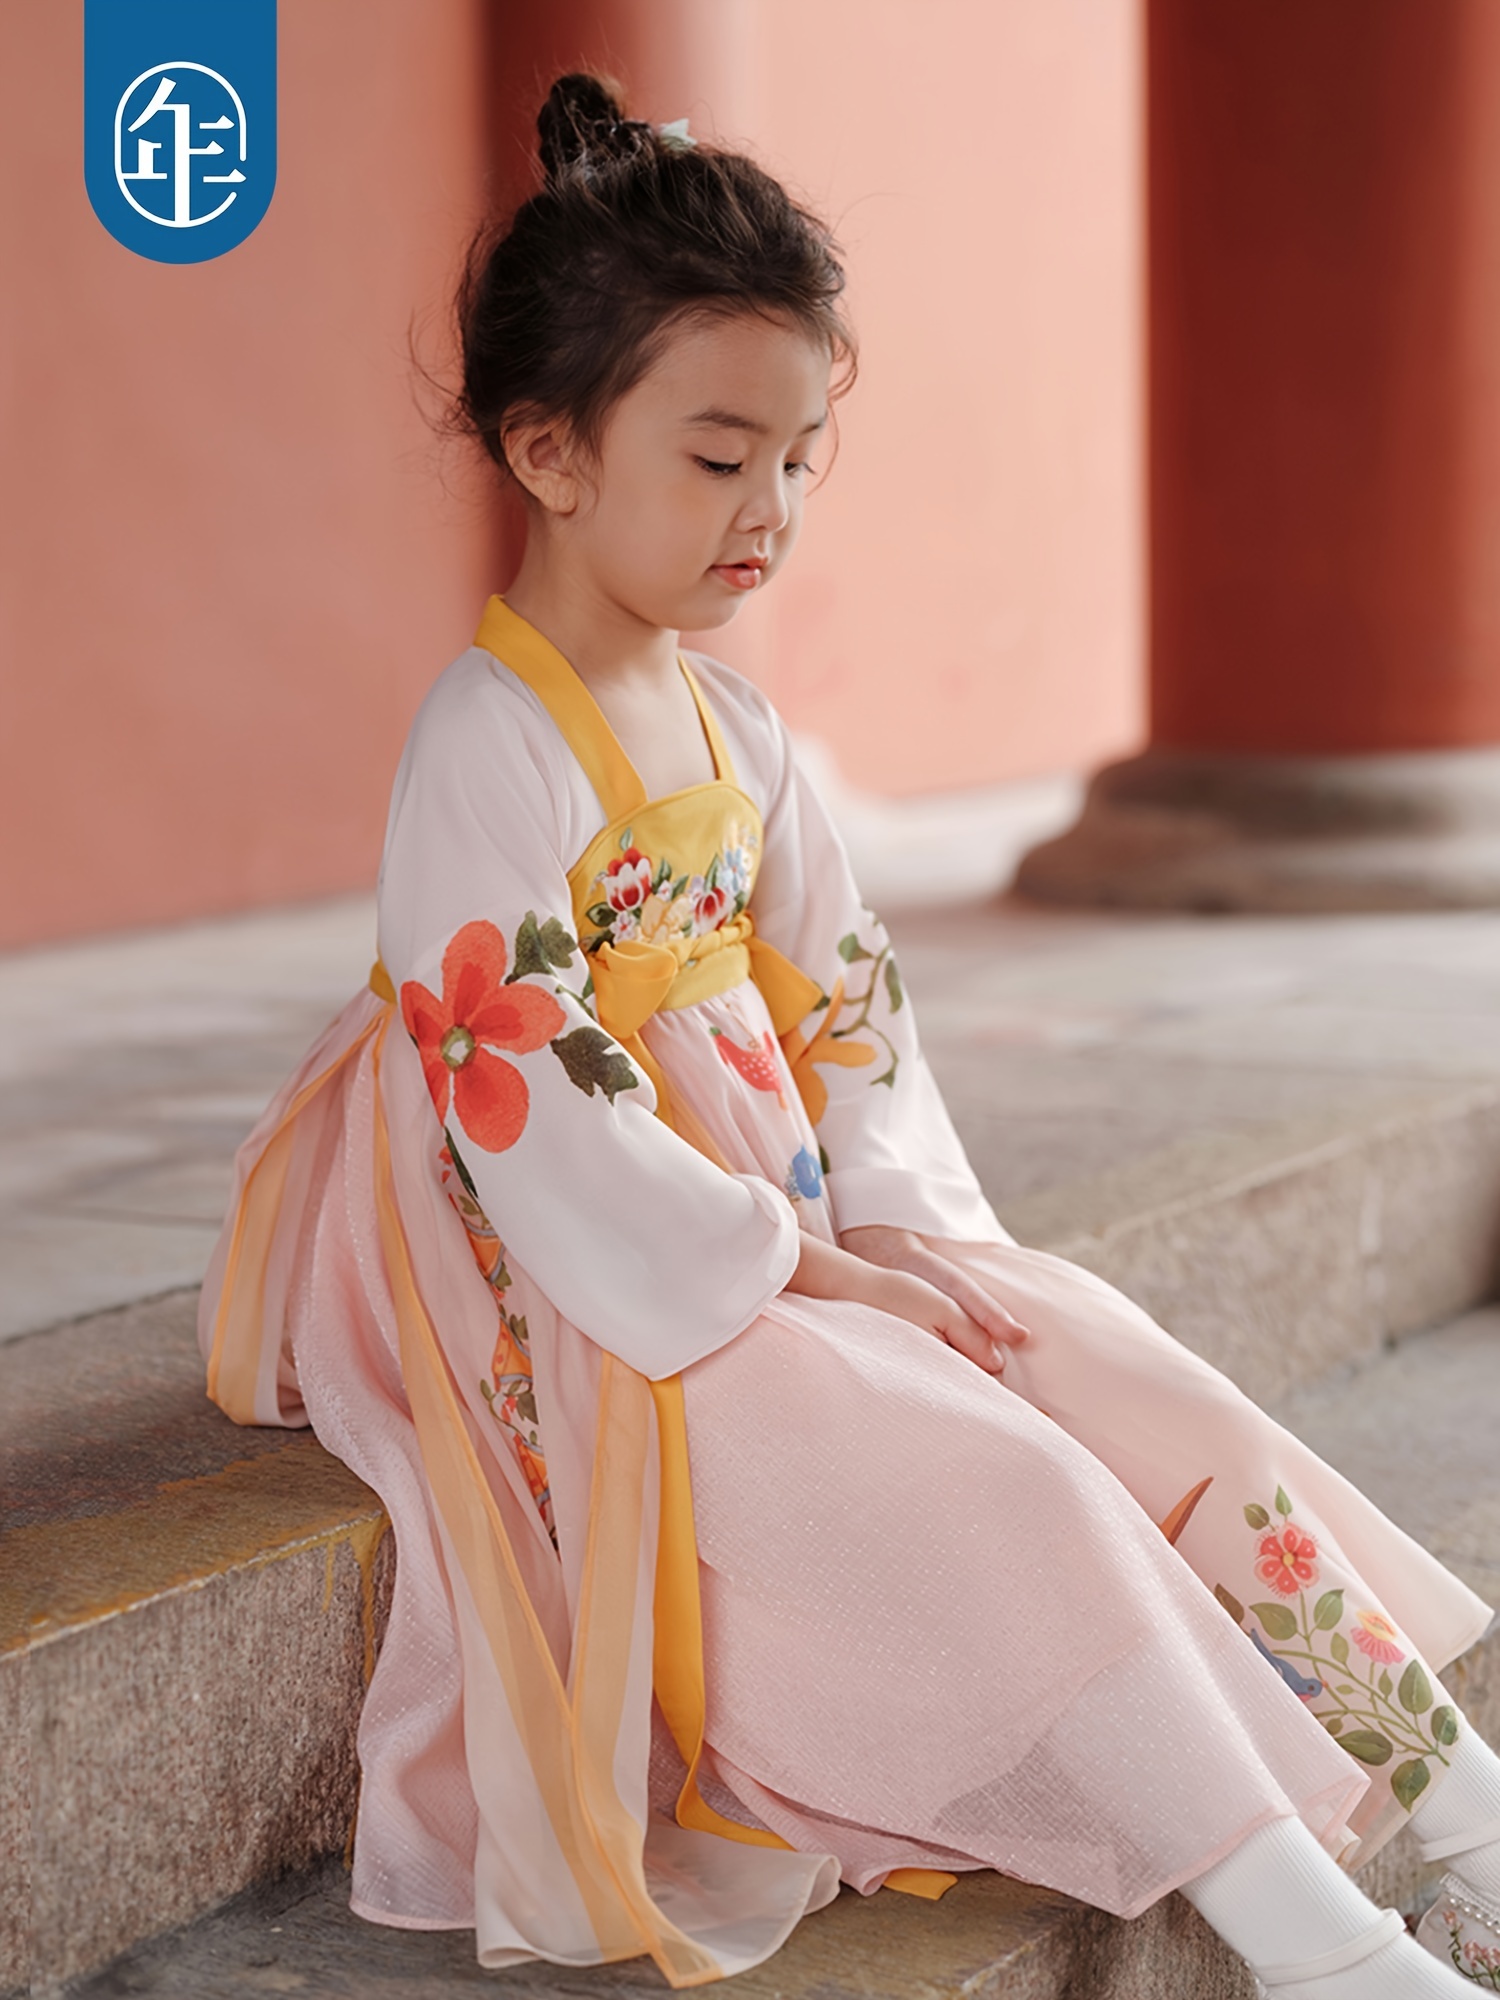 Beautiful Chinese Girl Hanfu Traditional Performance Costume - Fashion Hanfu